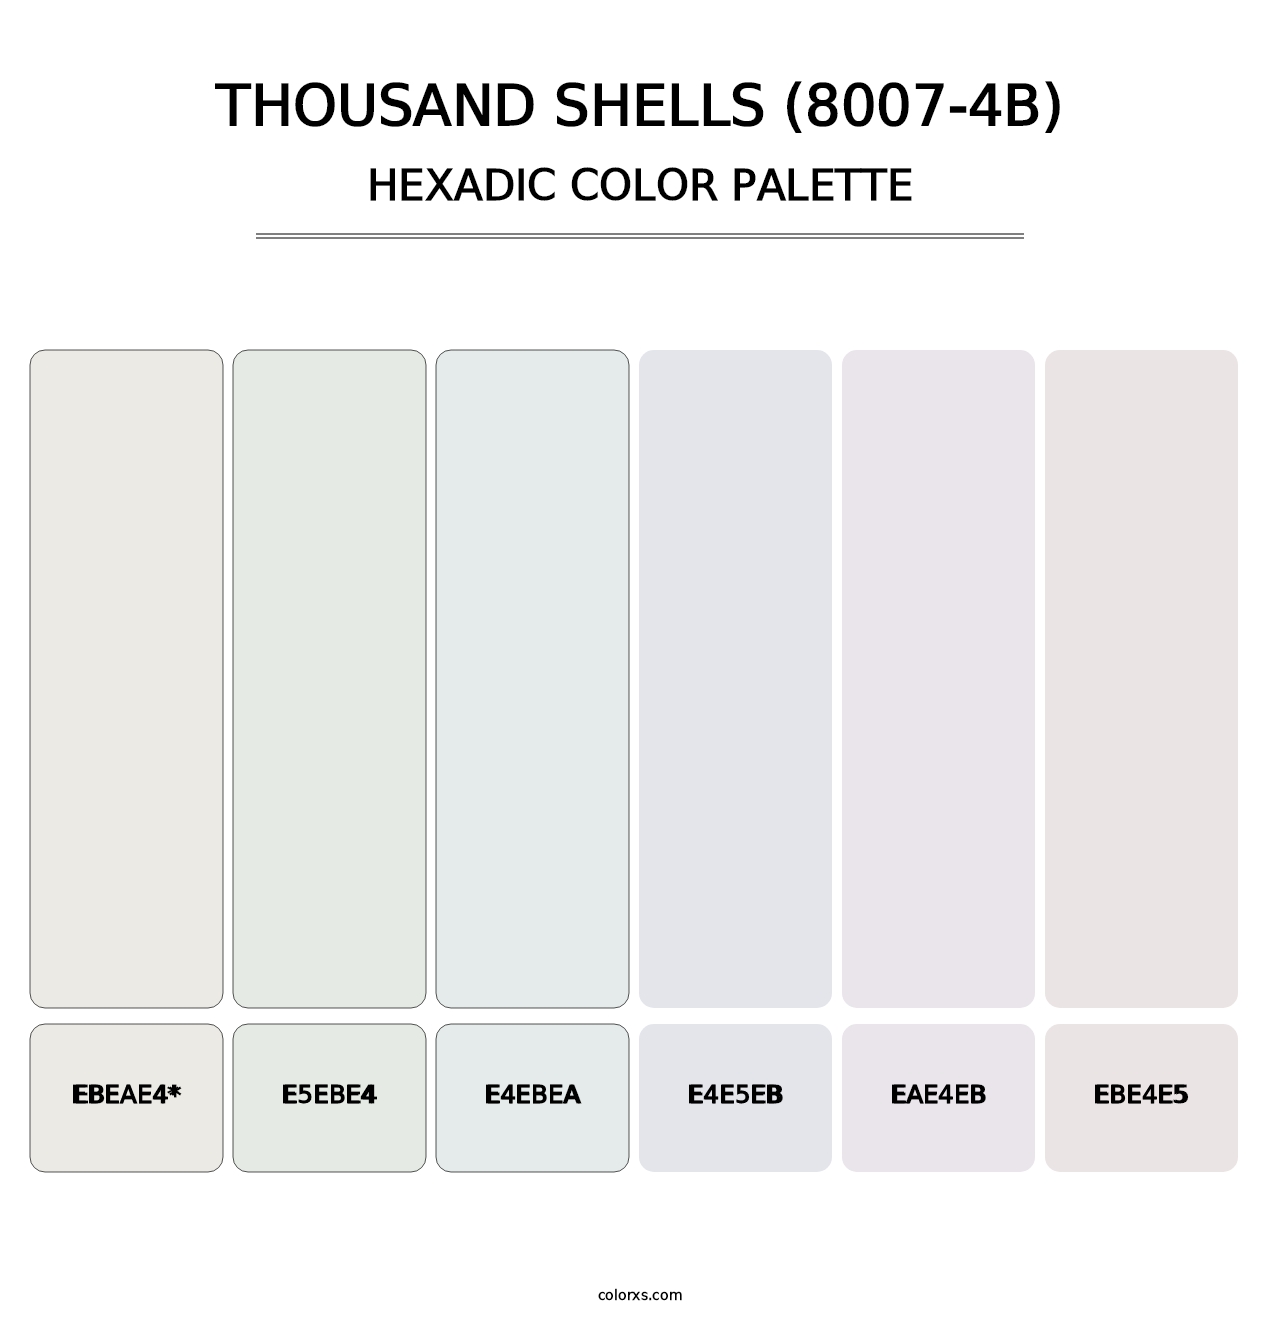 Thousand Shells (8007-4B) - Hexadic Color Palette